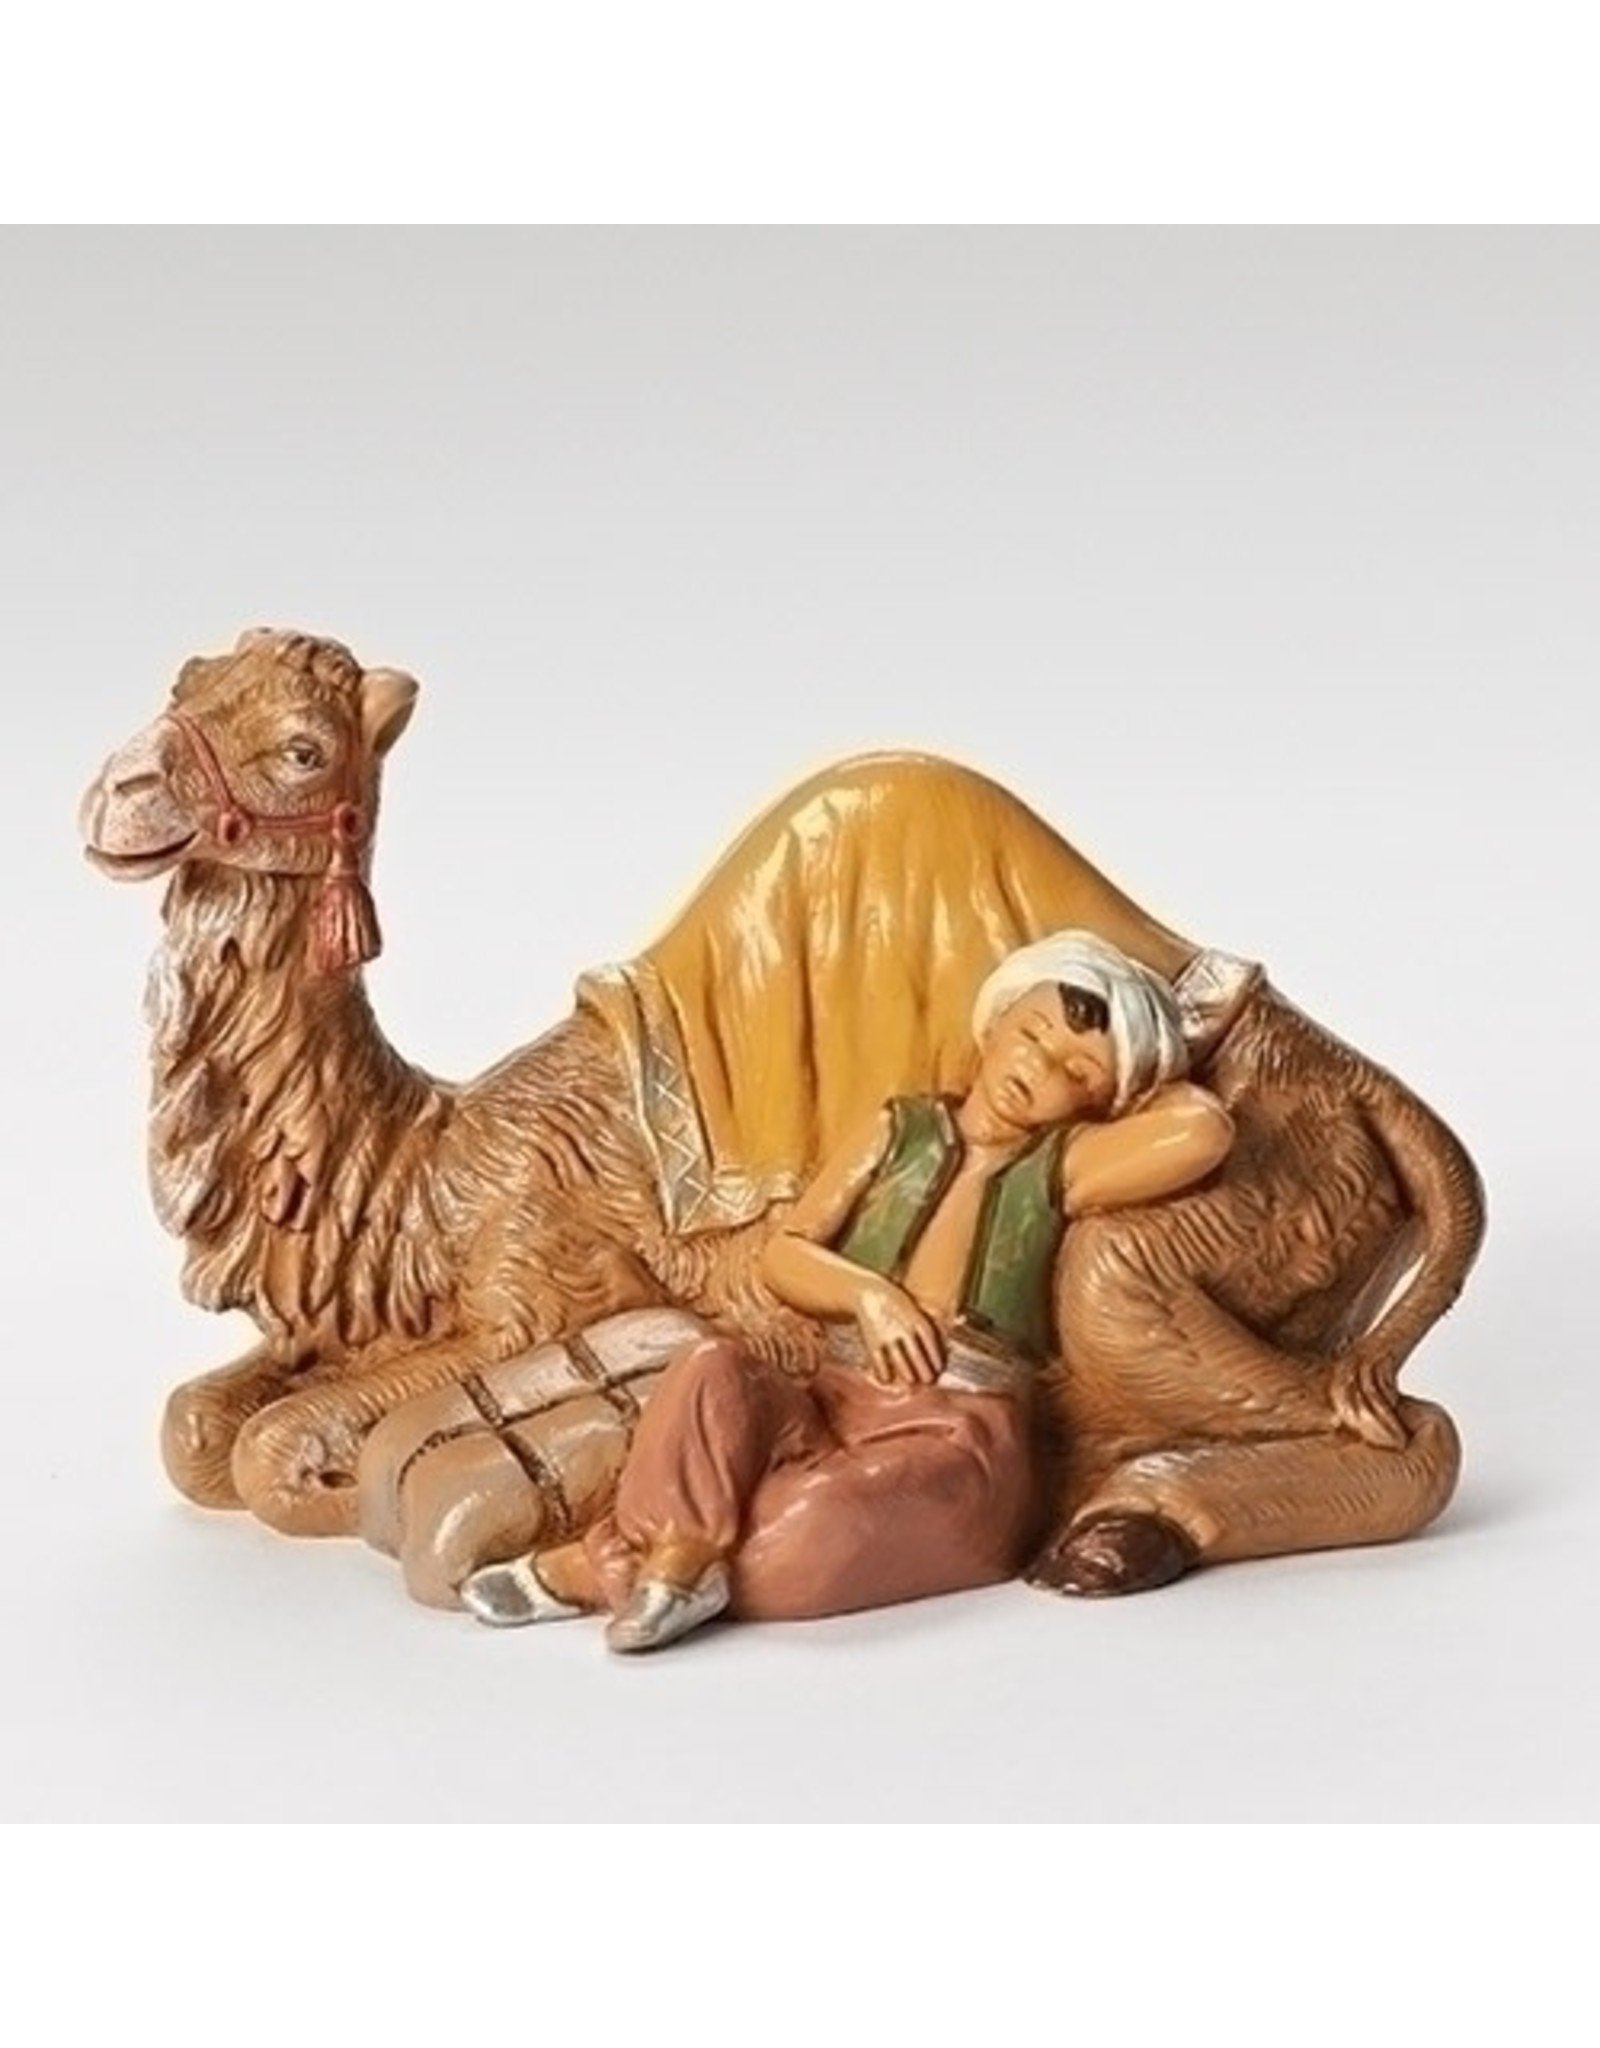 Fontanini - Cyrus, Boy with Camel 5"